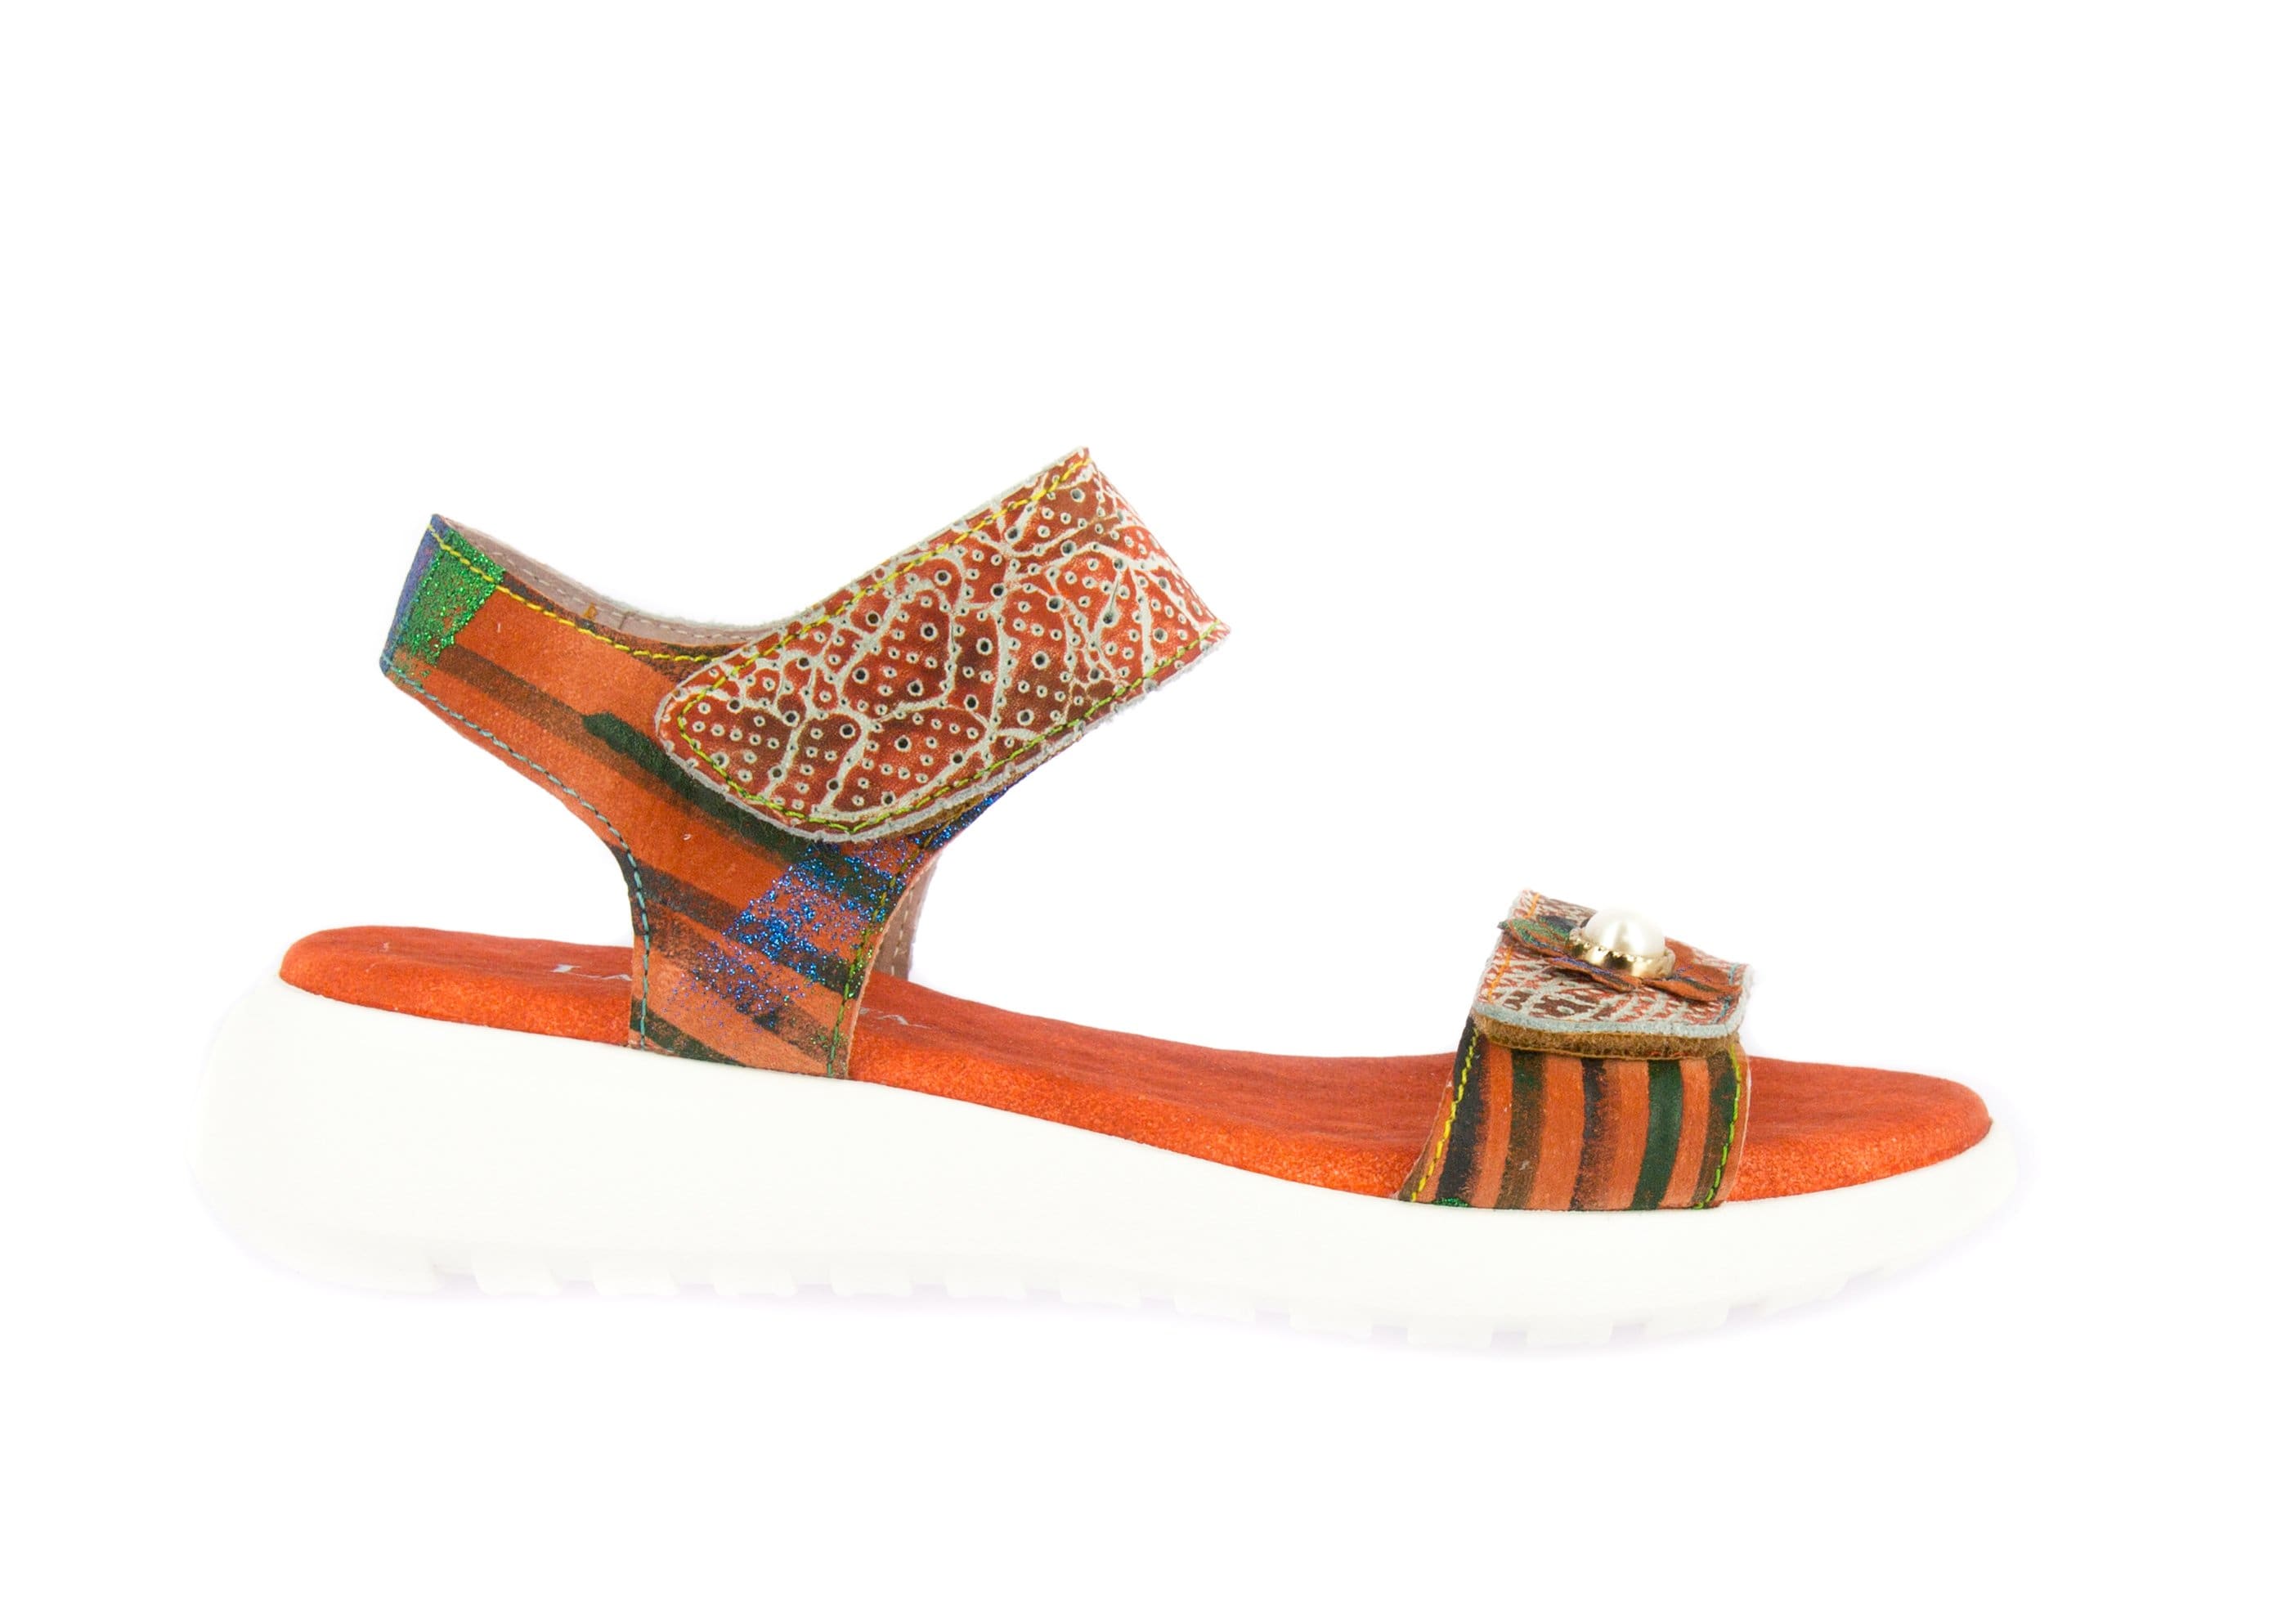 Chaussure FACLAISEO07 - 35 / ORANGE - Sandale